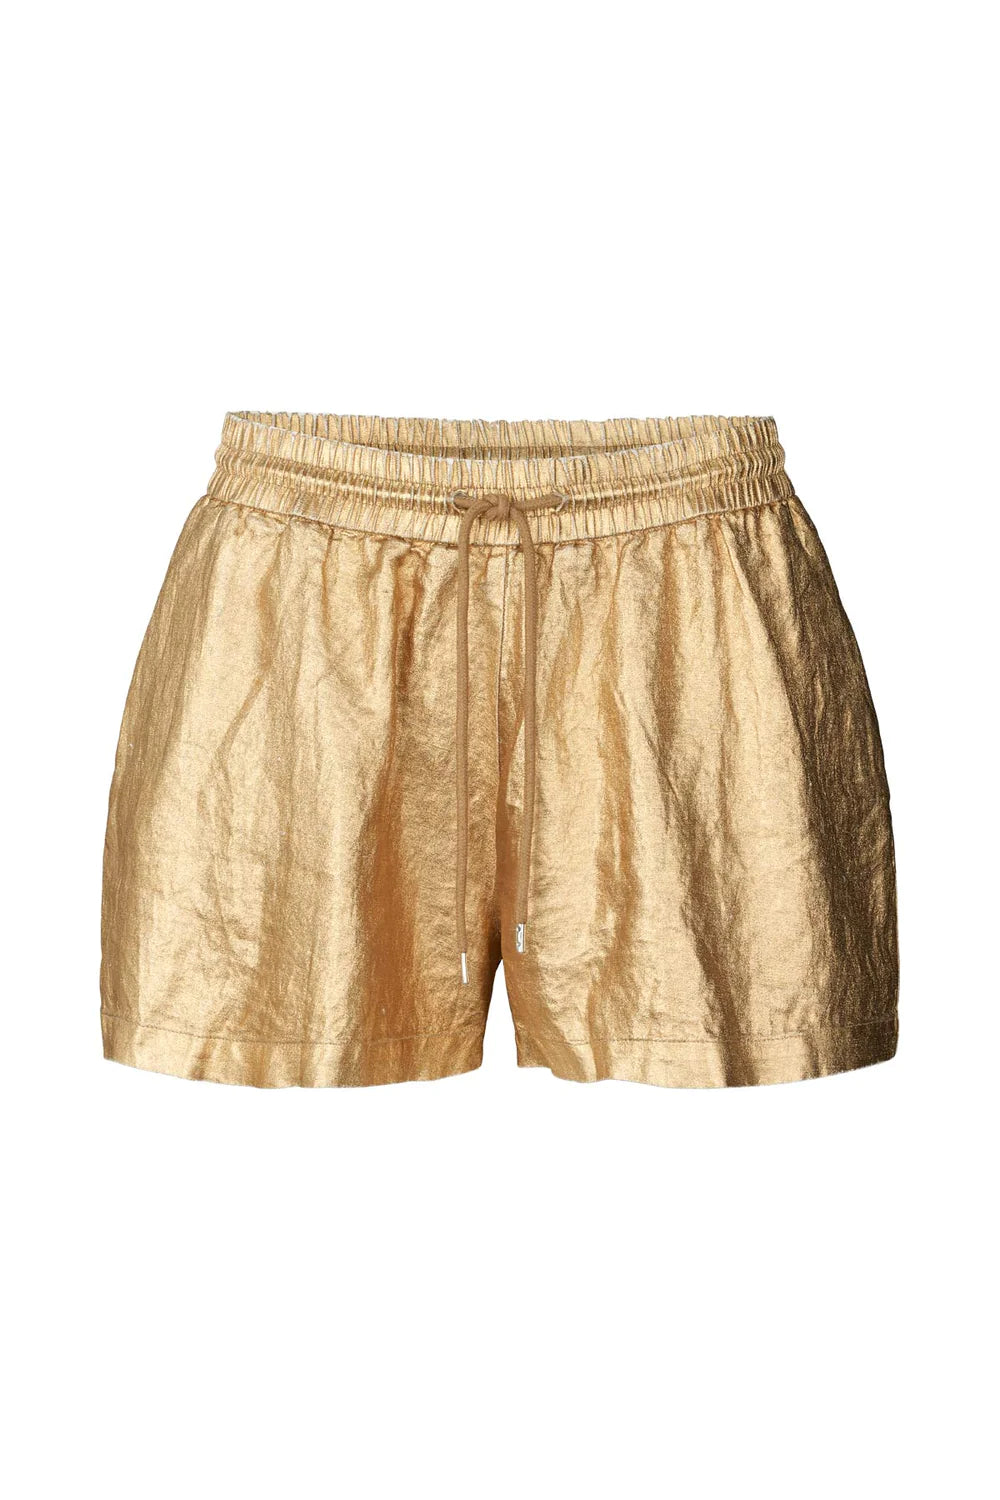 Olu midas shorts in gold